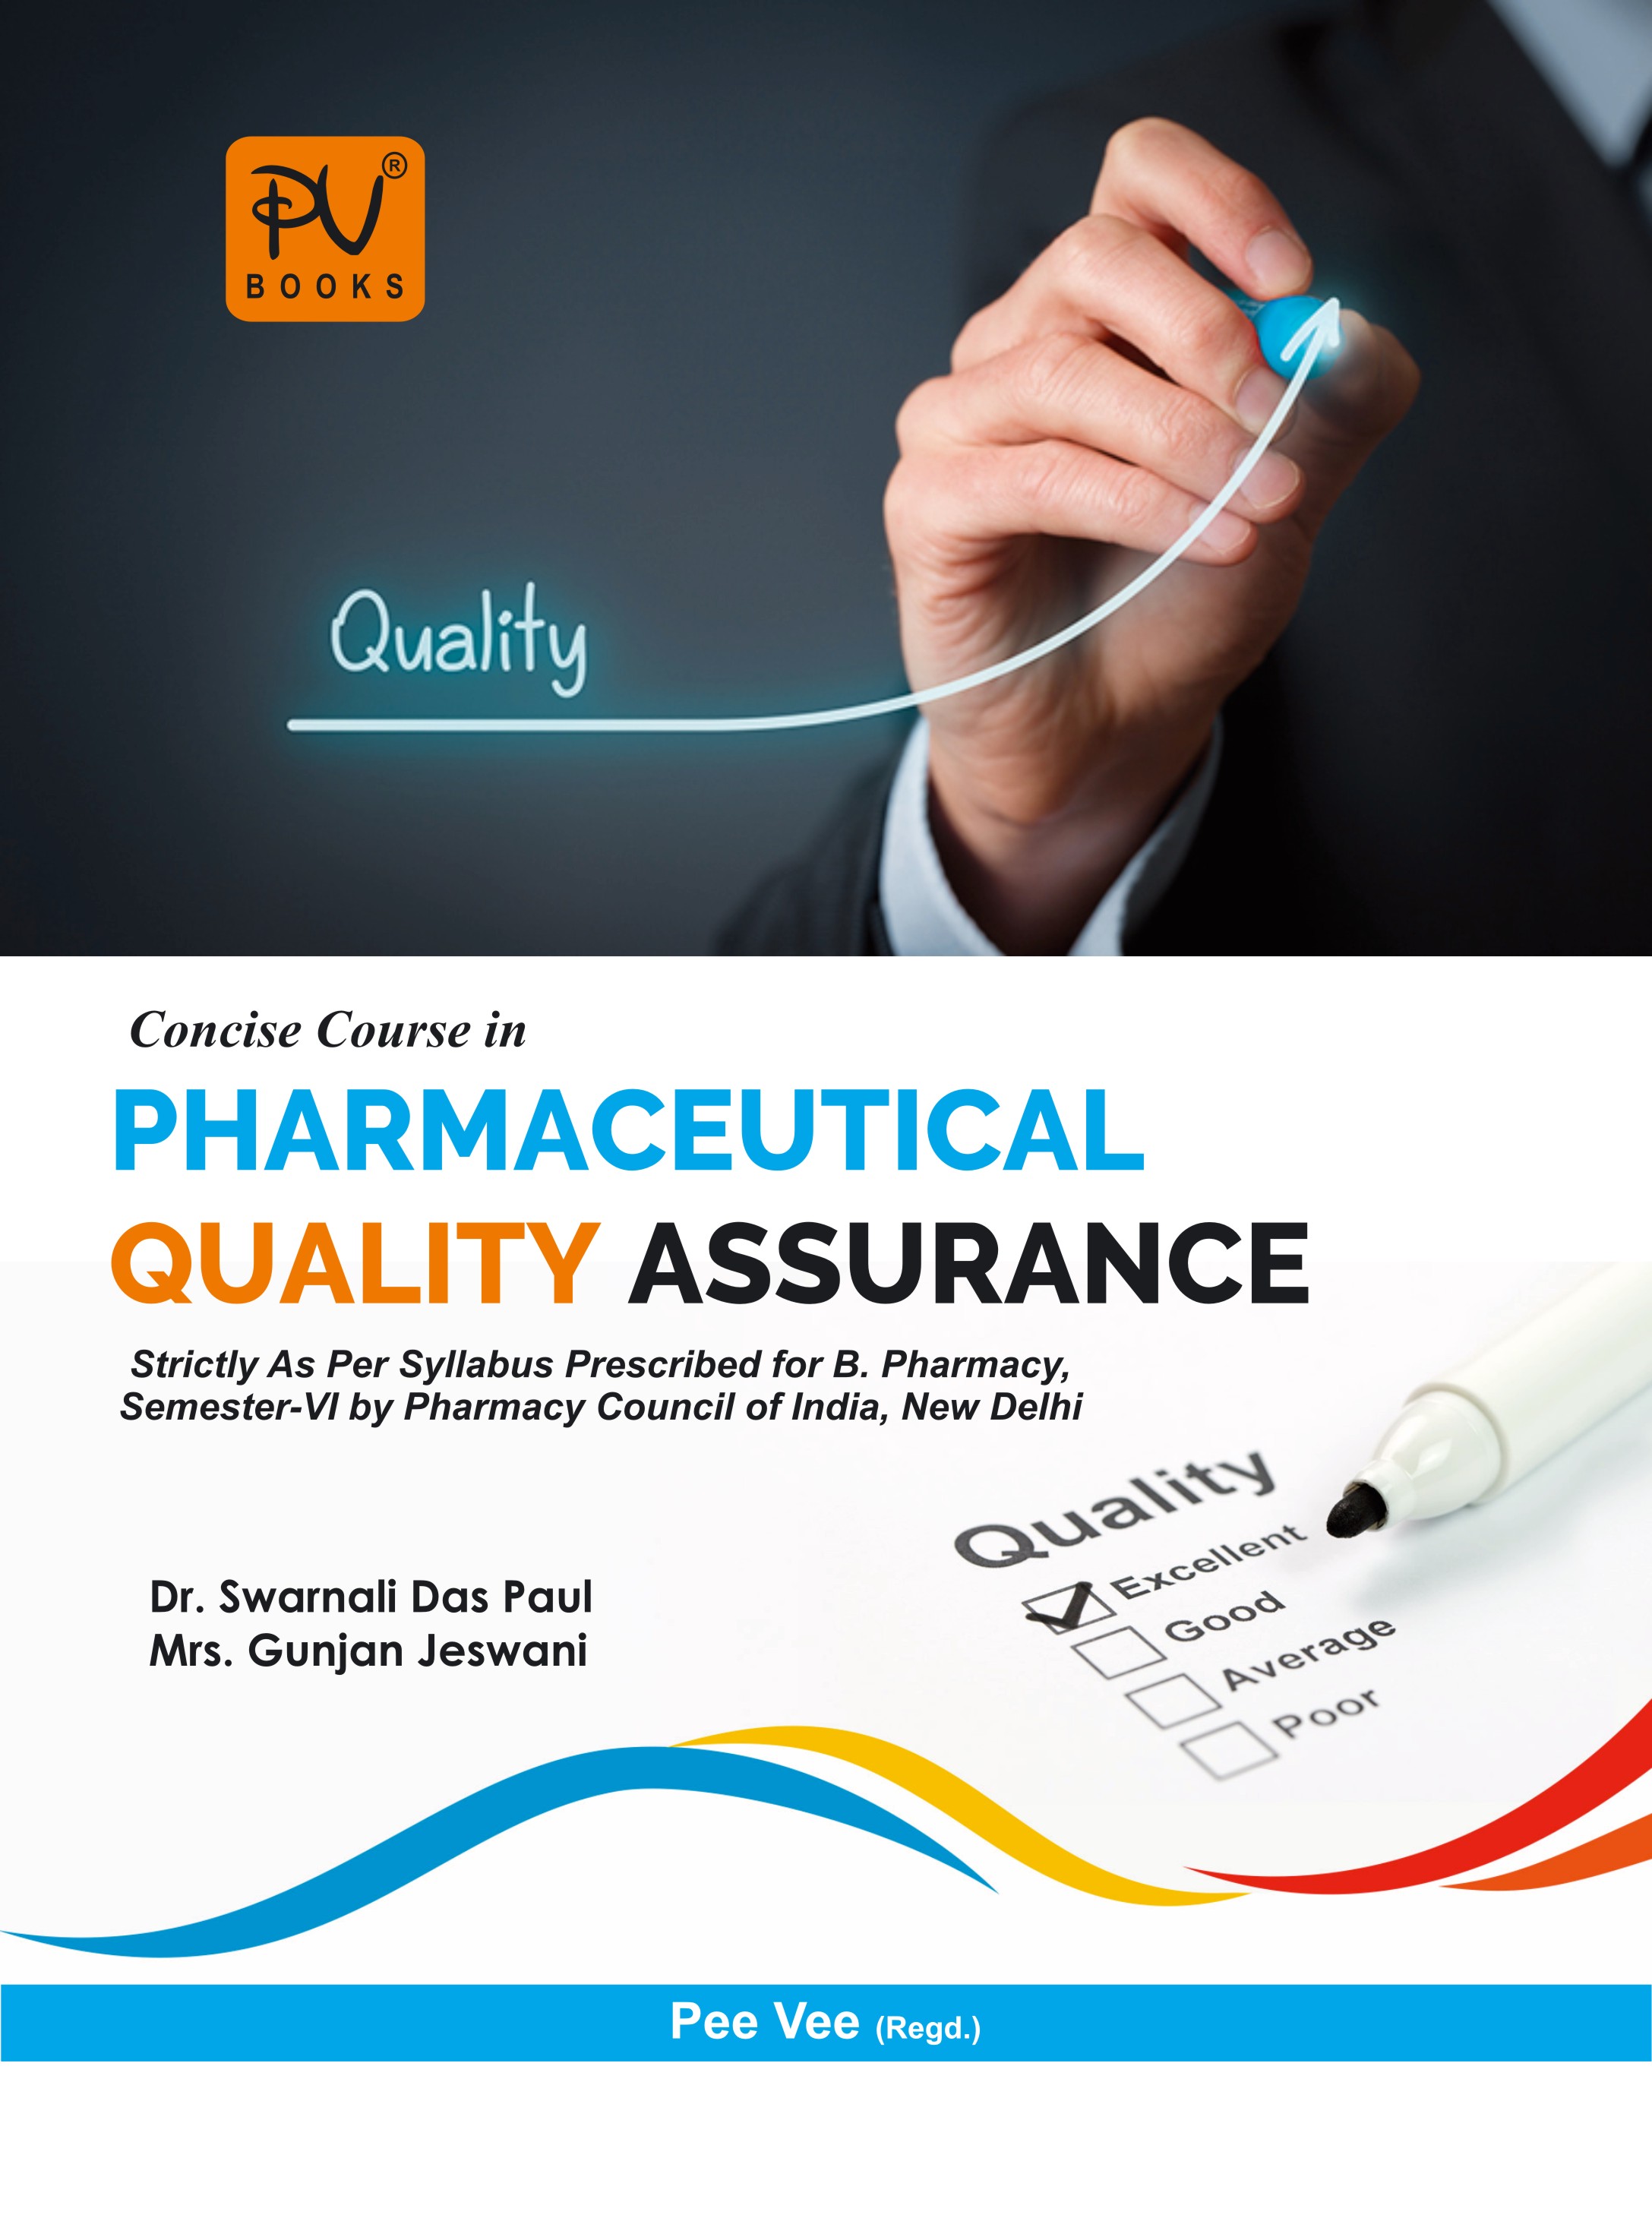 Pharma quality assurance jobs in india